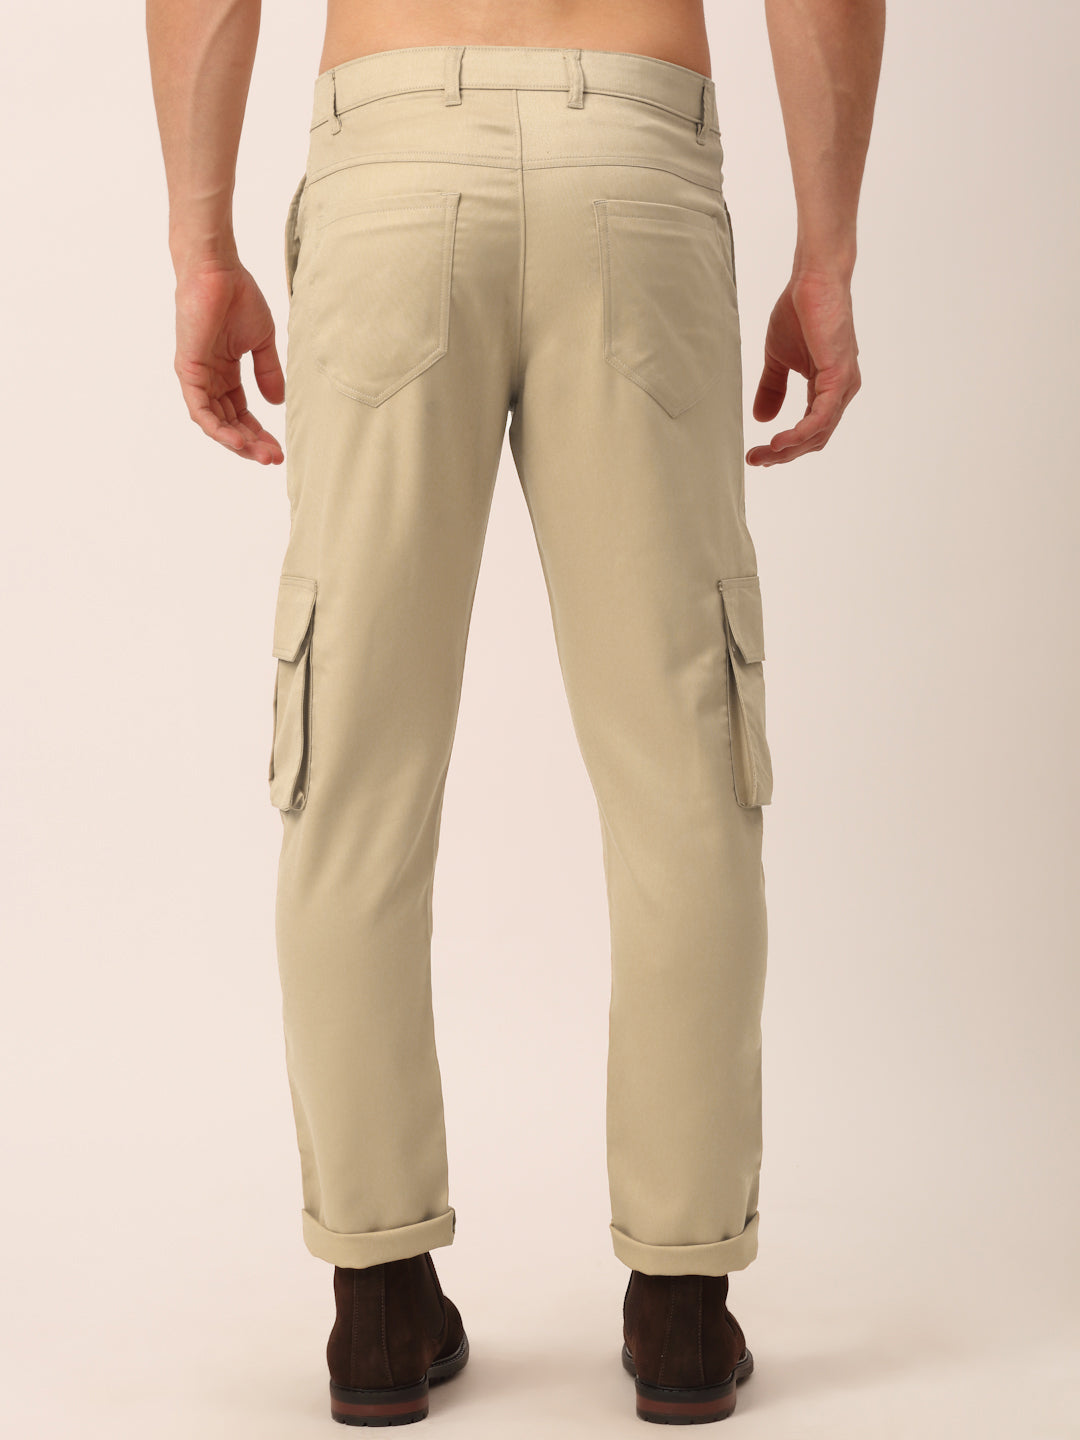 SHOWOFF Men Casual Cotton Slim Fit Track Pants